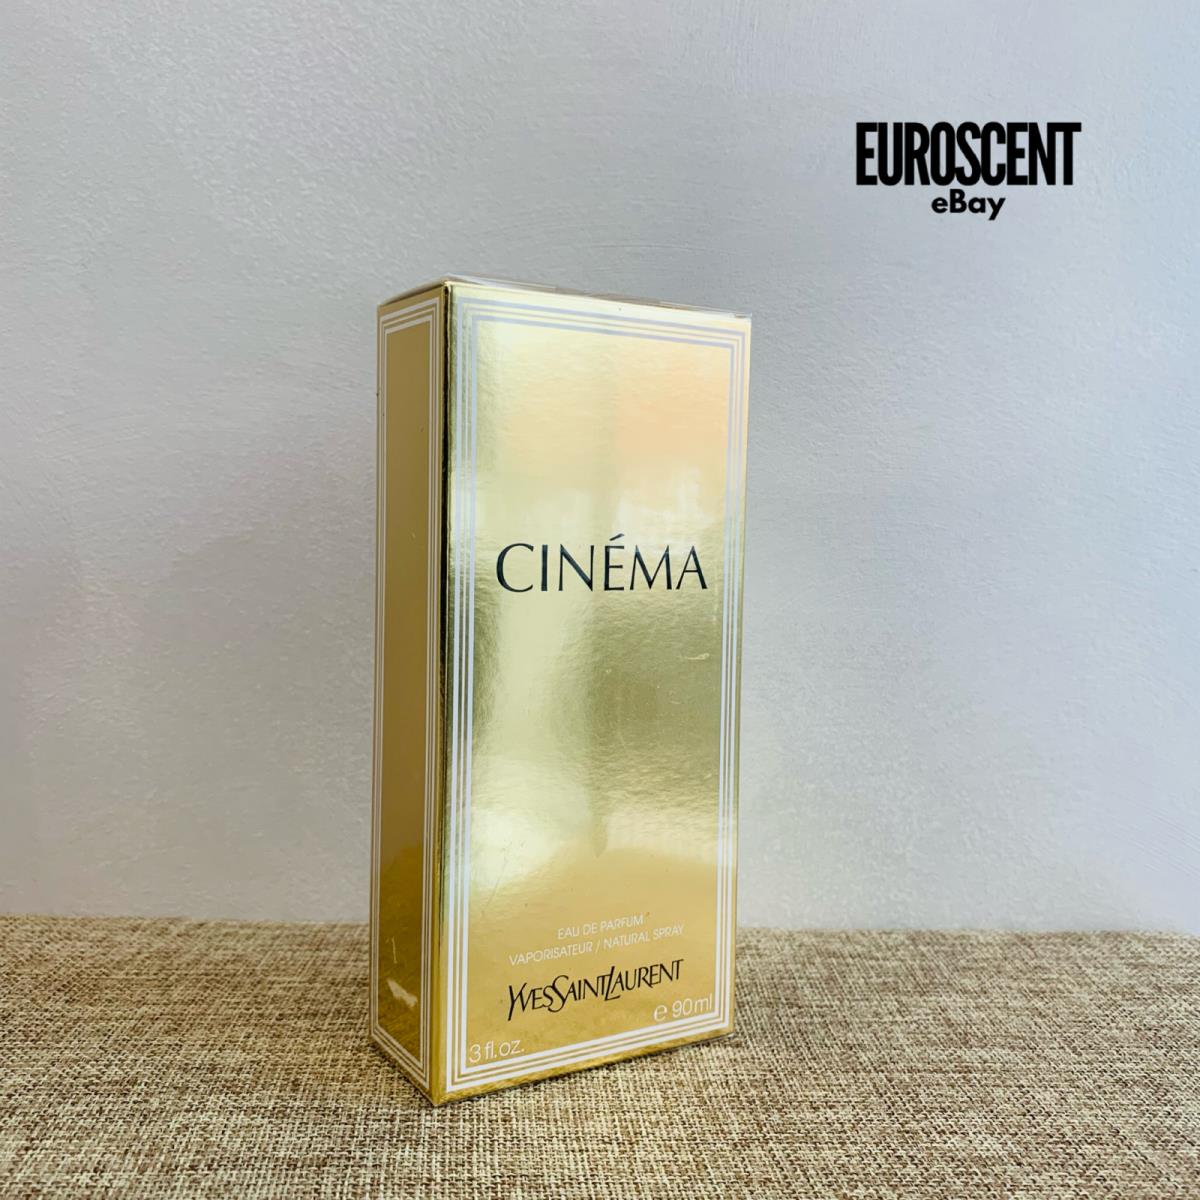 Ysl Yves Saint Laurent Cinema Perfume Eau de Parfum Fragrance Edp 90ml / 3oz